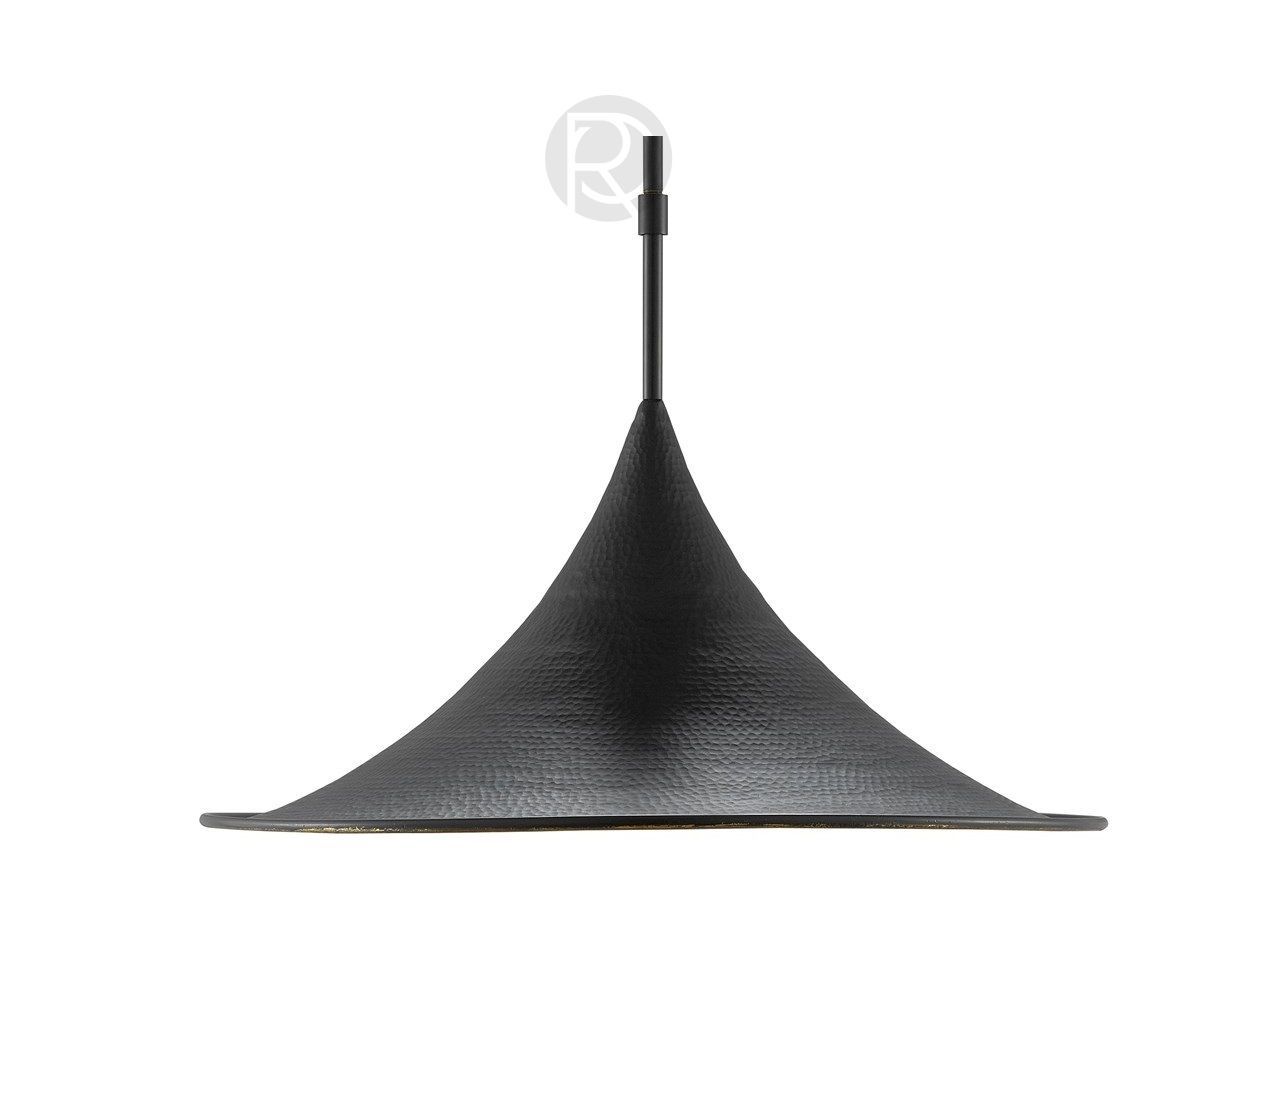 Hanging lamp ABERFOYLE by Currey & Company